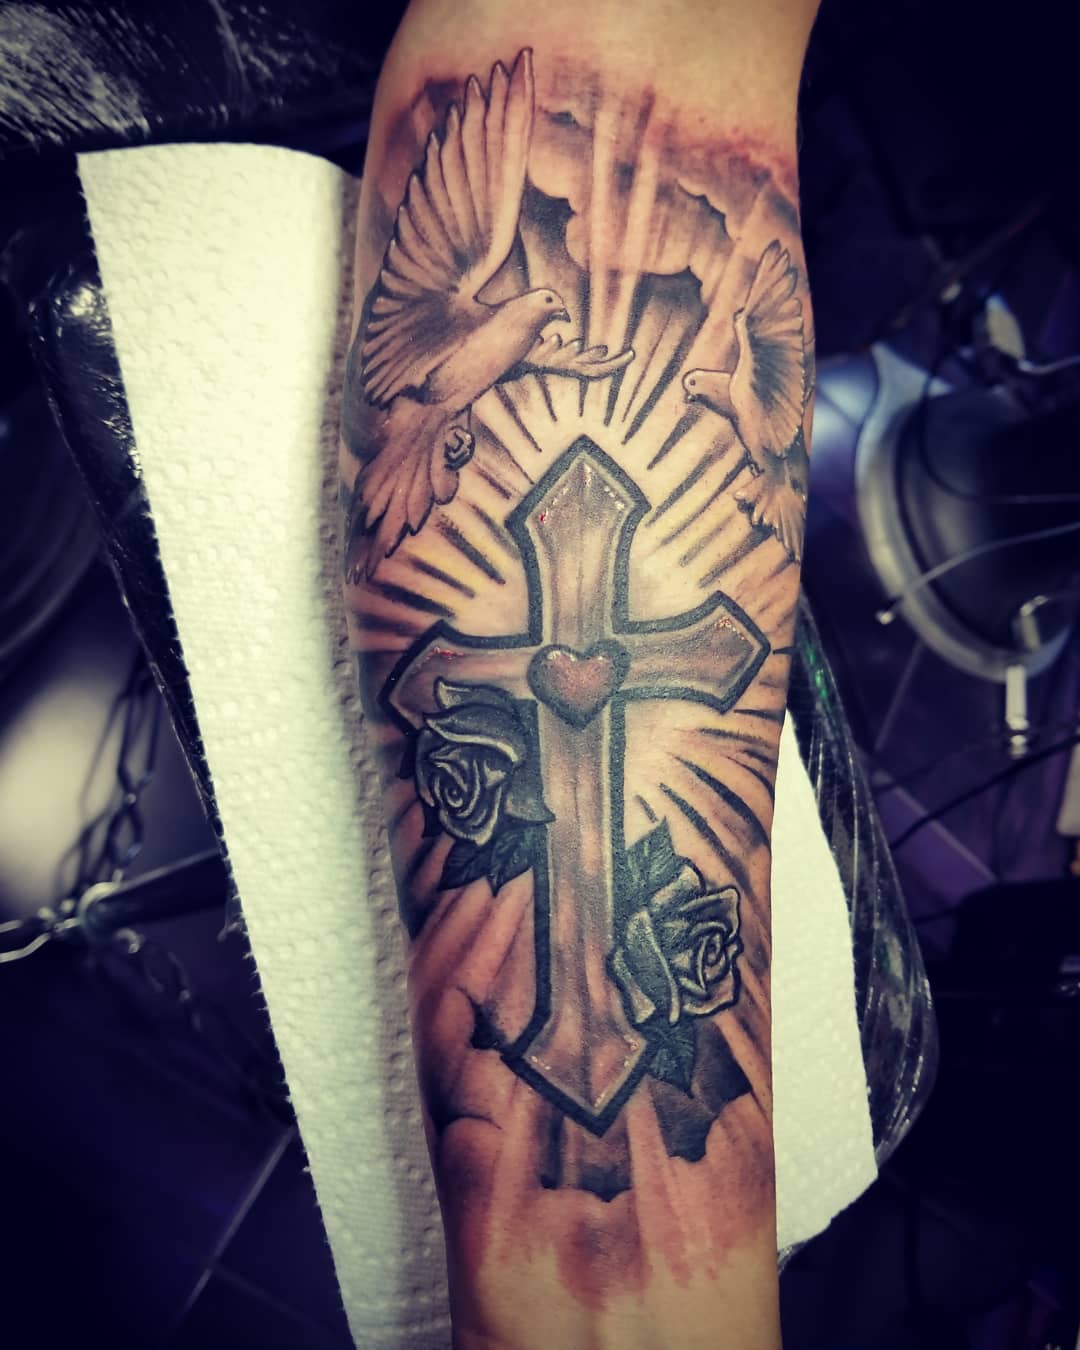 Rich Best Cross Tattoos for full left arm - Best Cross Tattoos - Best